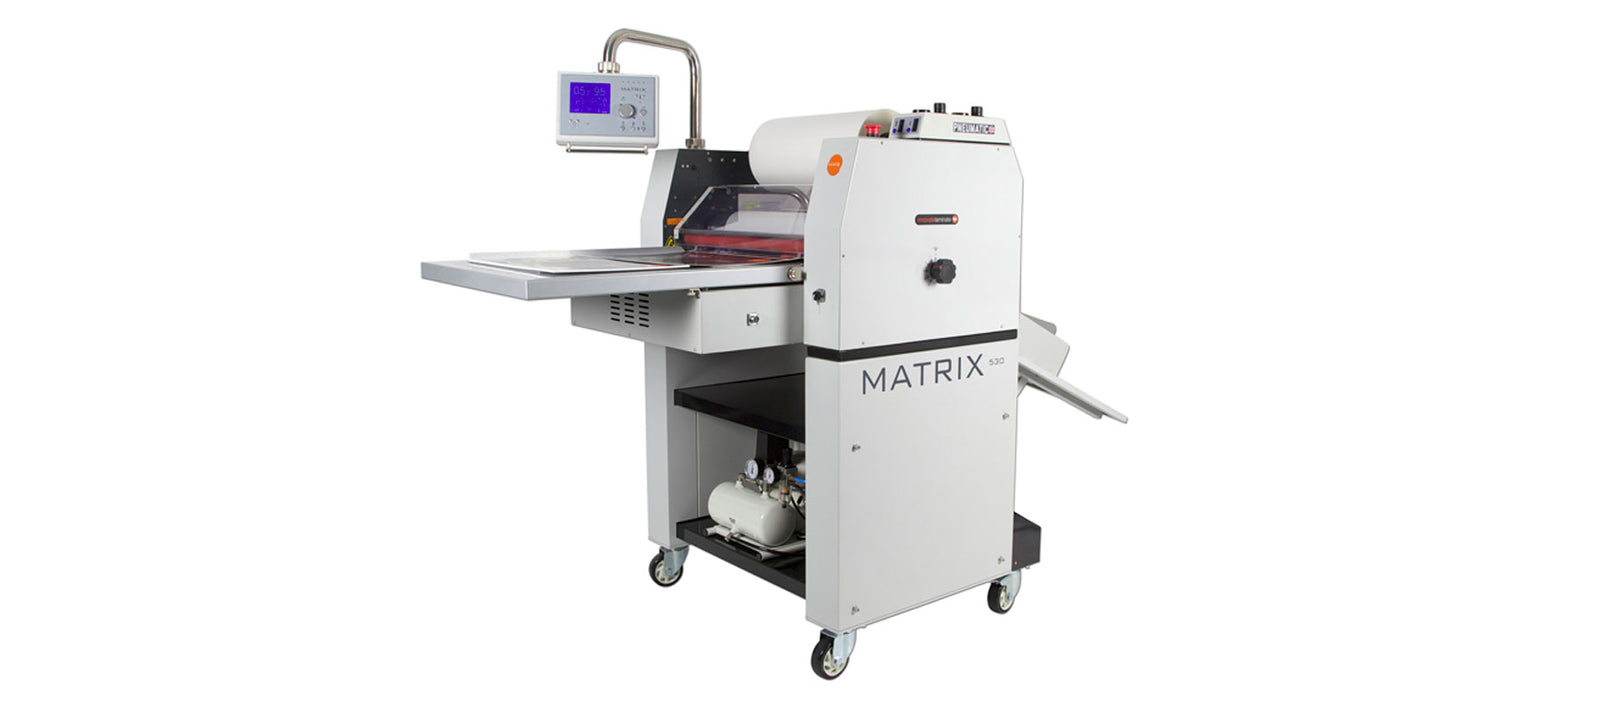 Warwick Printing get the Matrix 530P Laminator